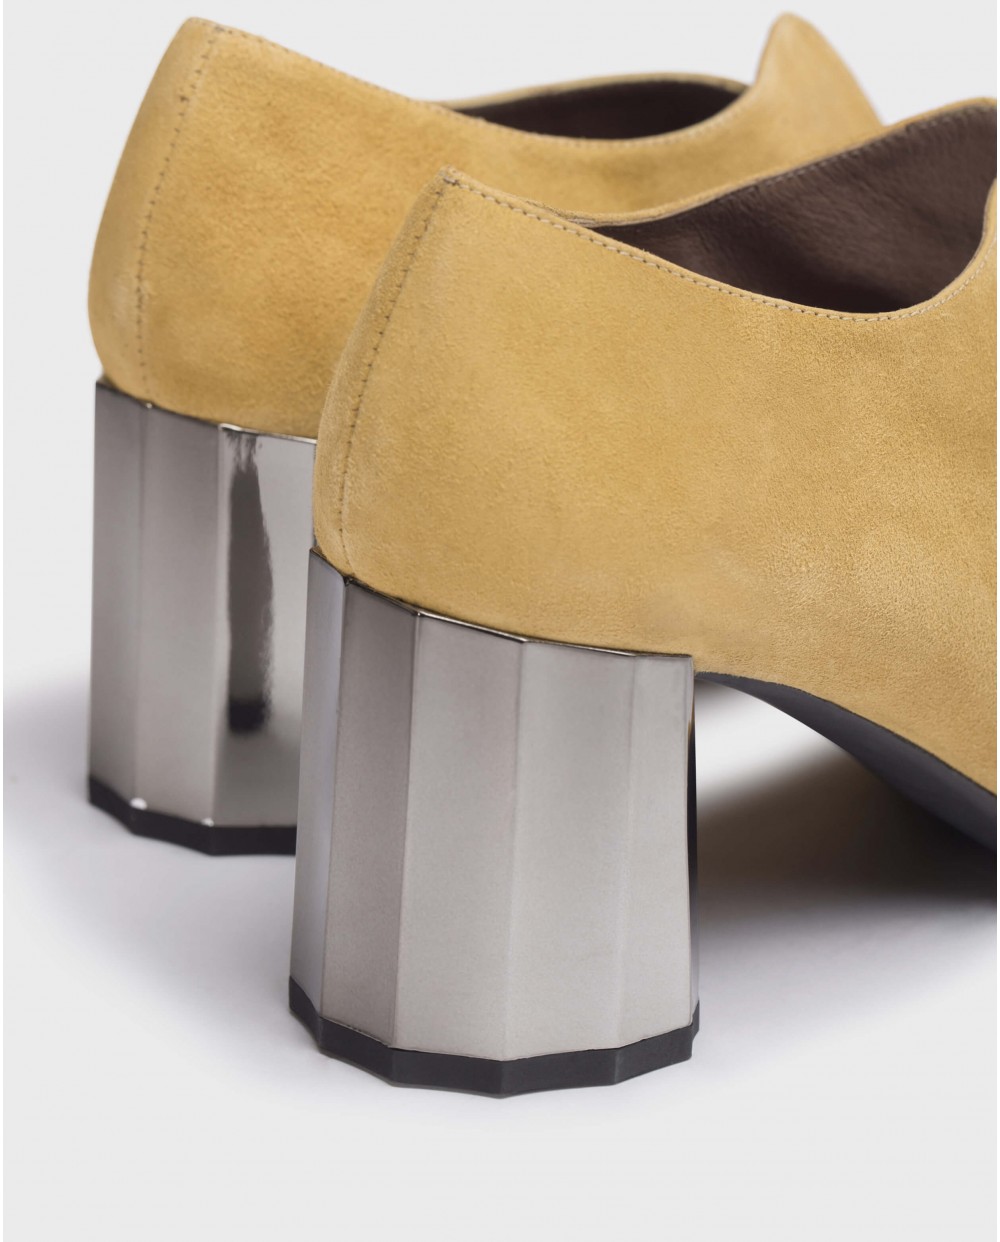 High heeled geometric shoe